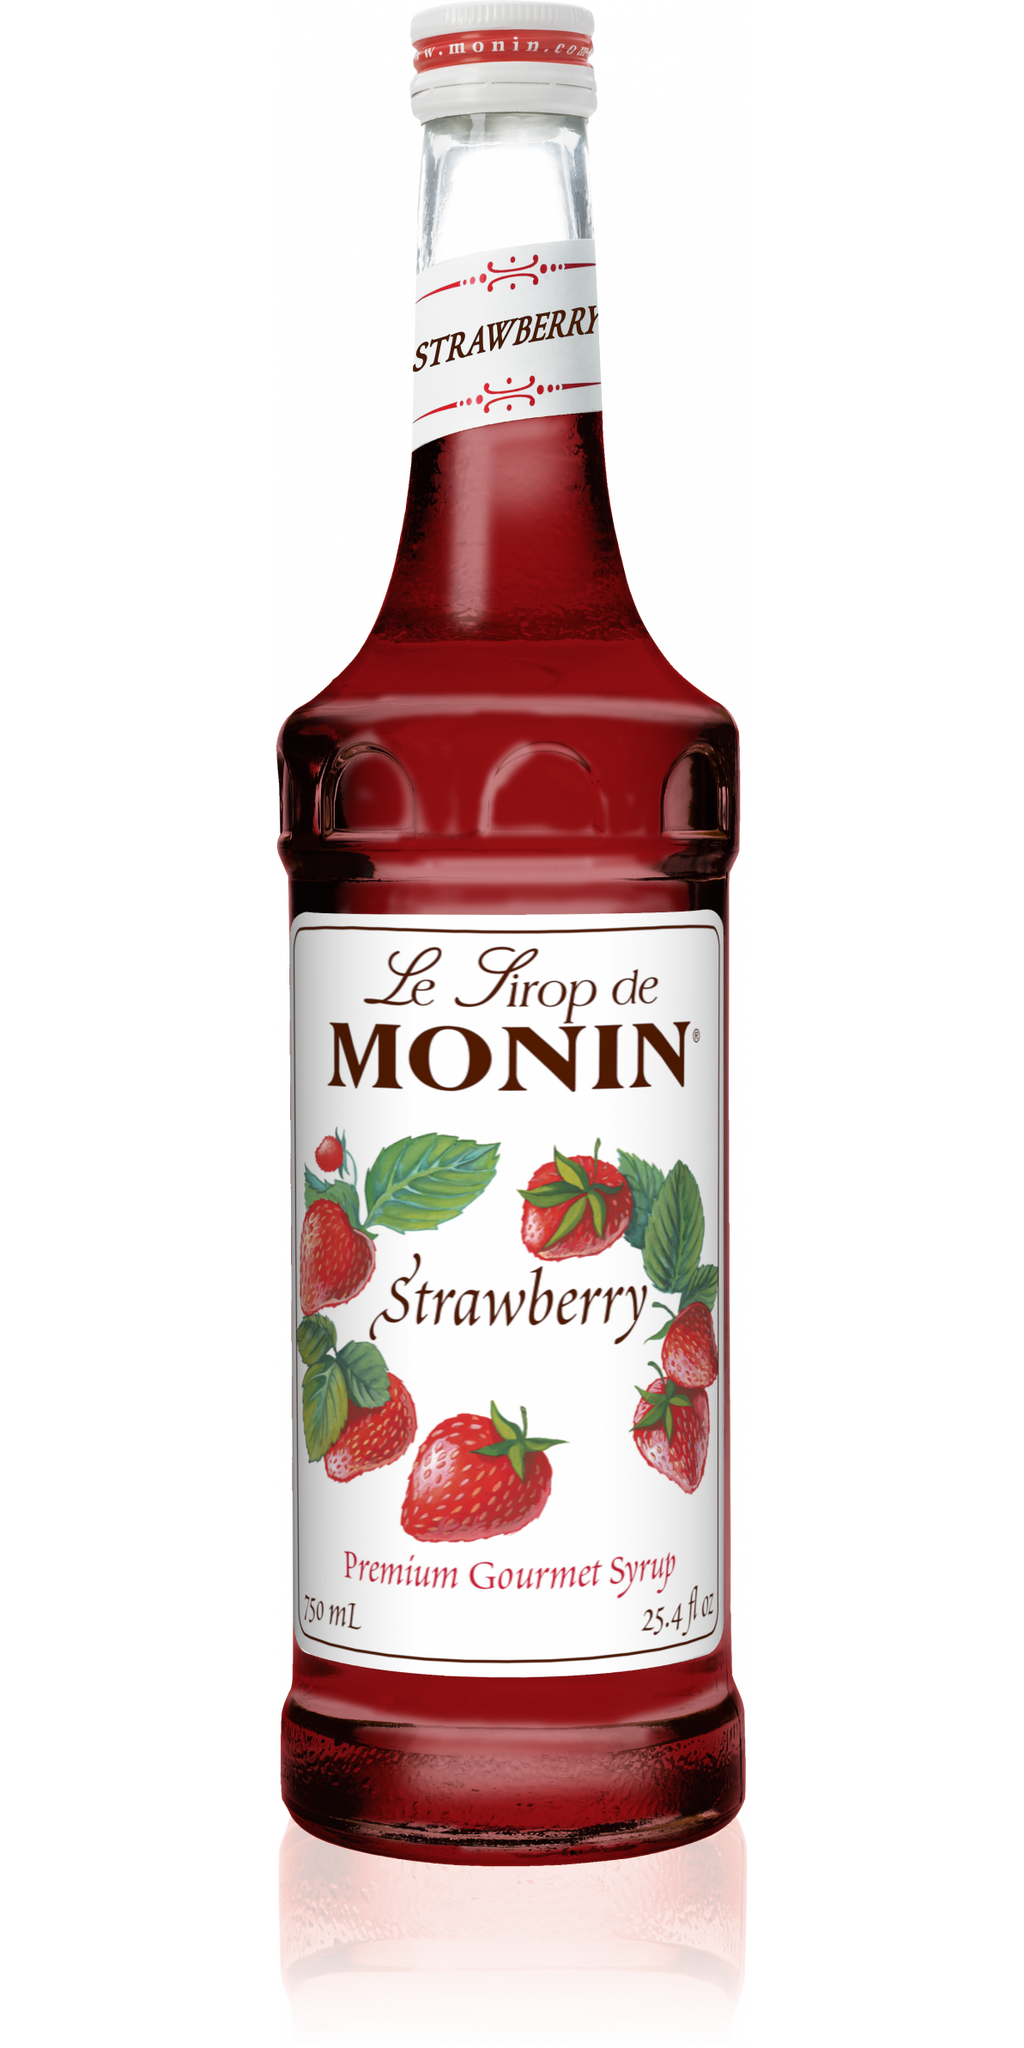 Monin Strawberry Syrup